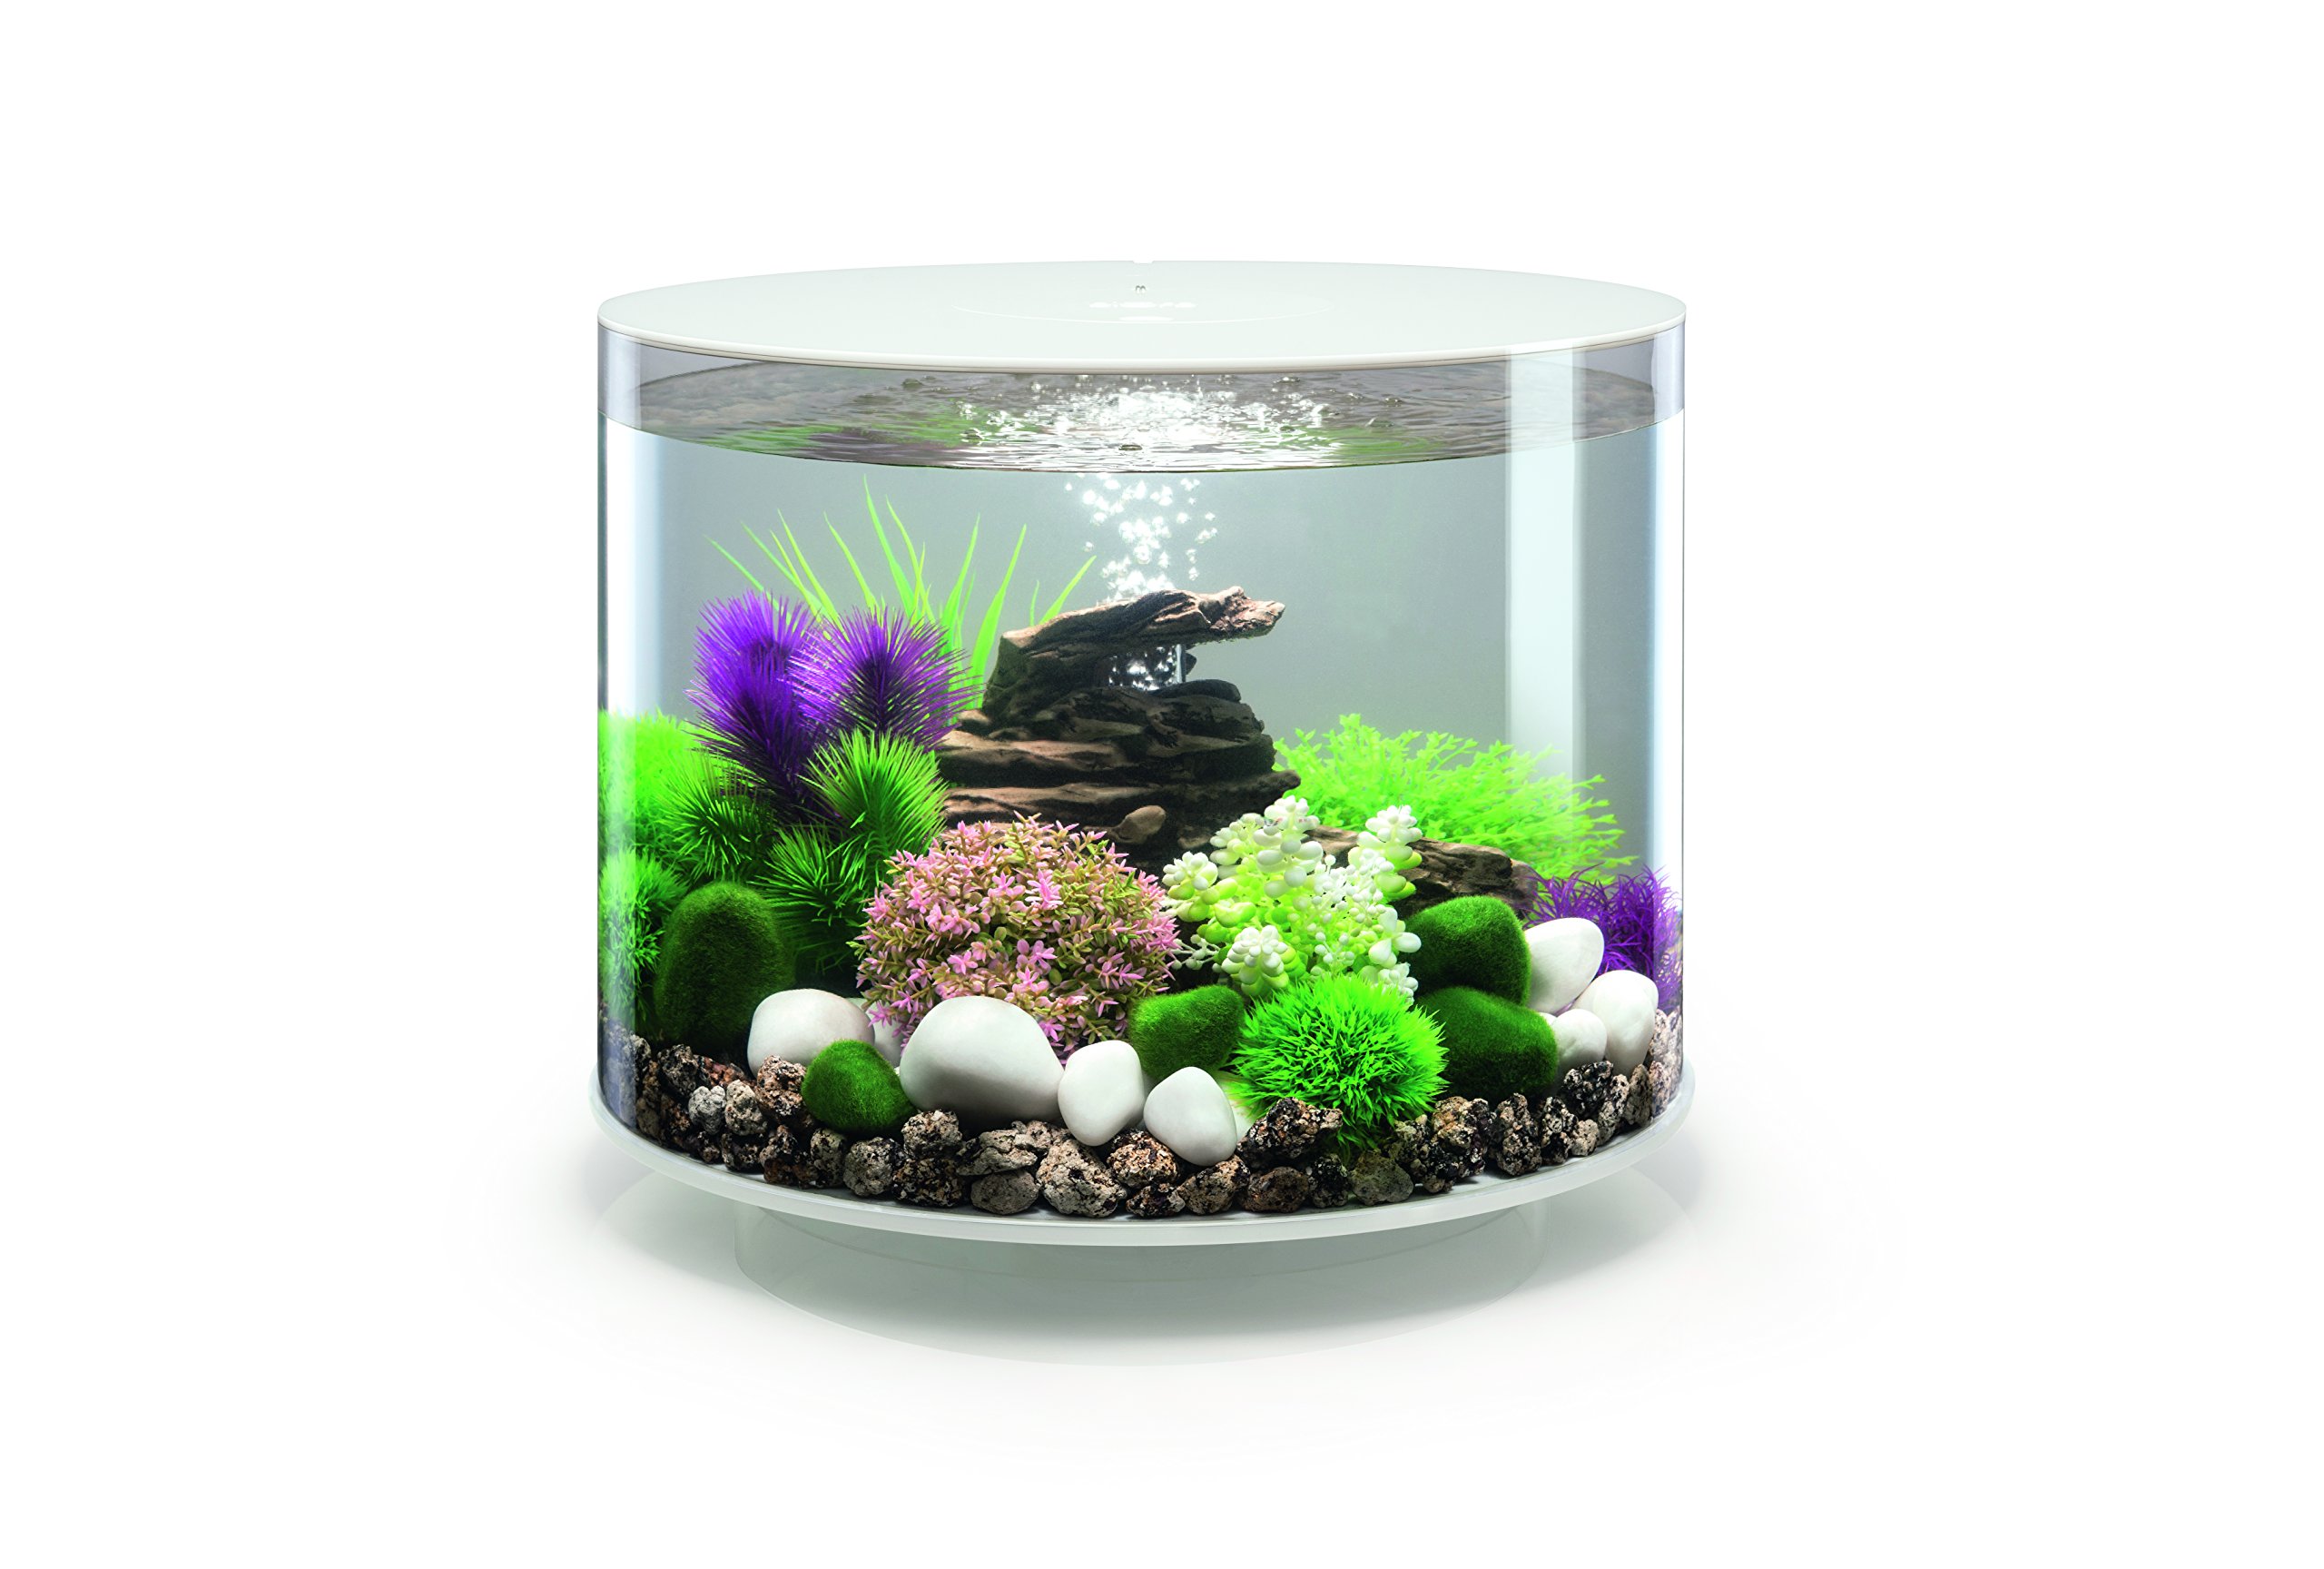 biOrb TUBE 35 LED Aquarium (35 Liter) - Aquarien-Komplett-Set mit LED Beleuchtung und patentiertem Filter-System | Acryl-Becken